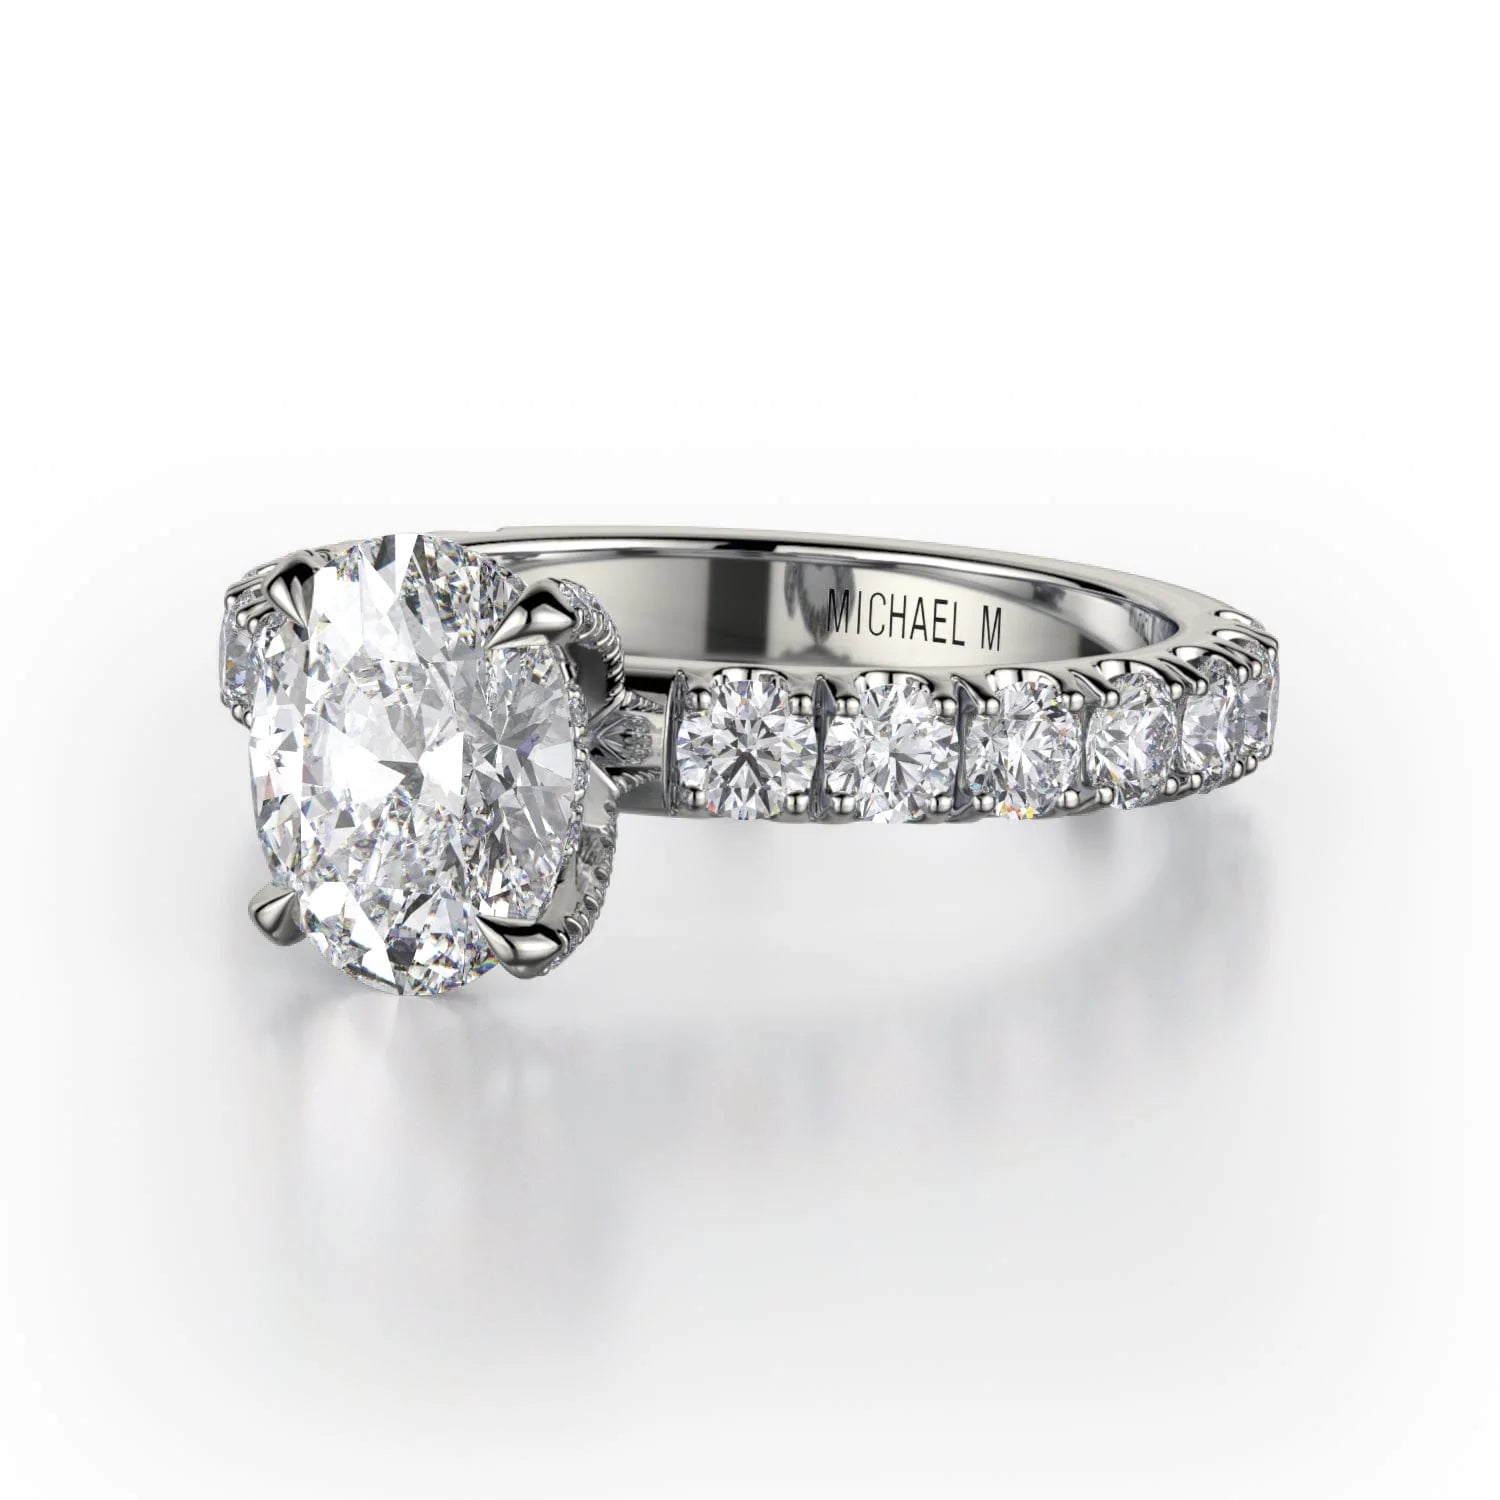 MICHAEL M Engagement Rings Platinum Crown R731-2 R731-2PT